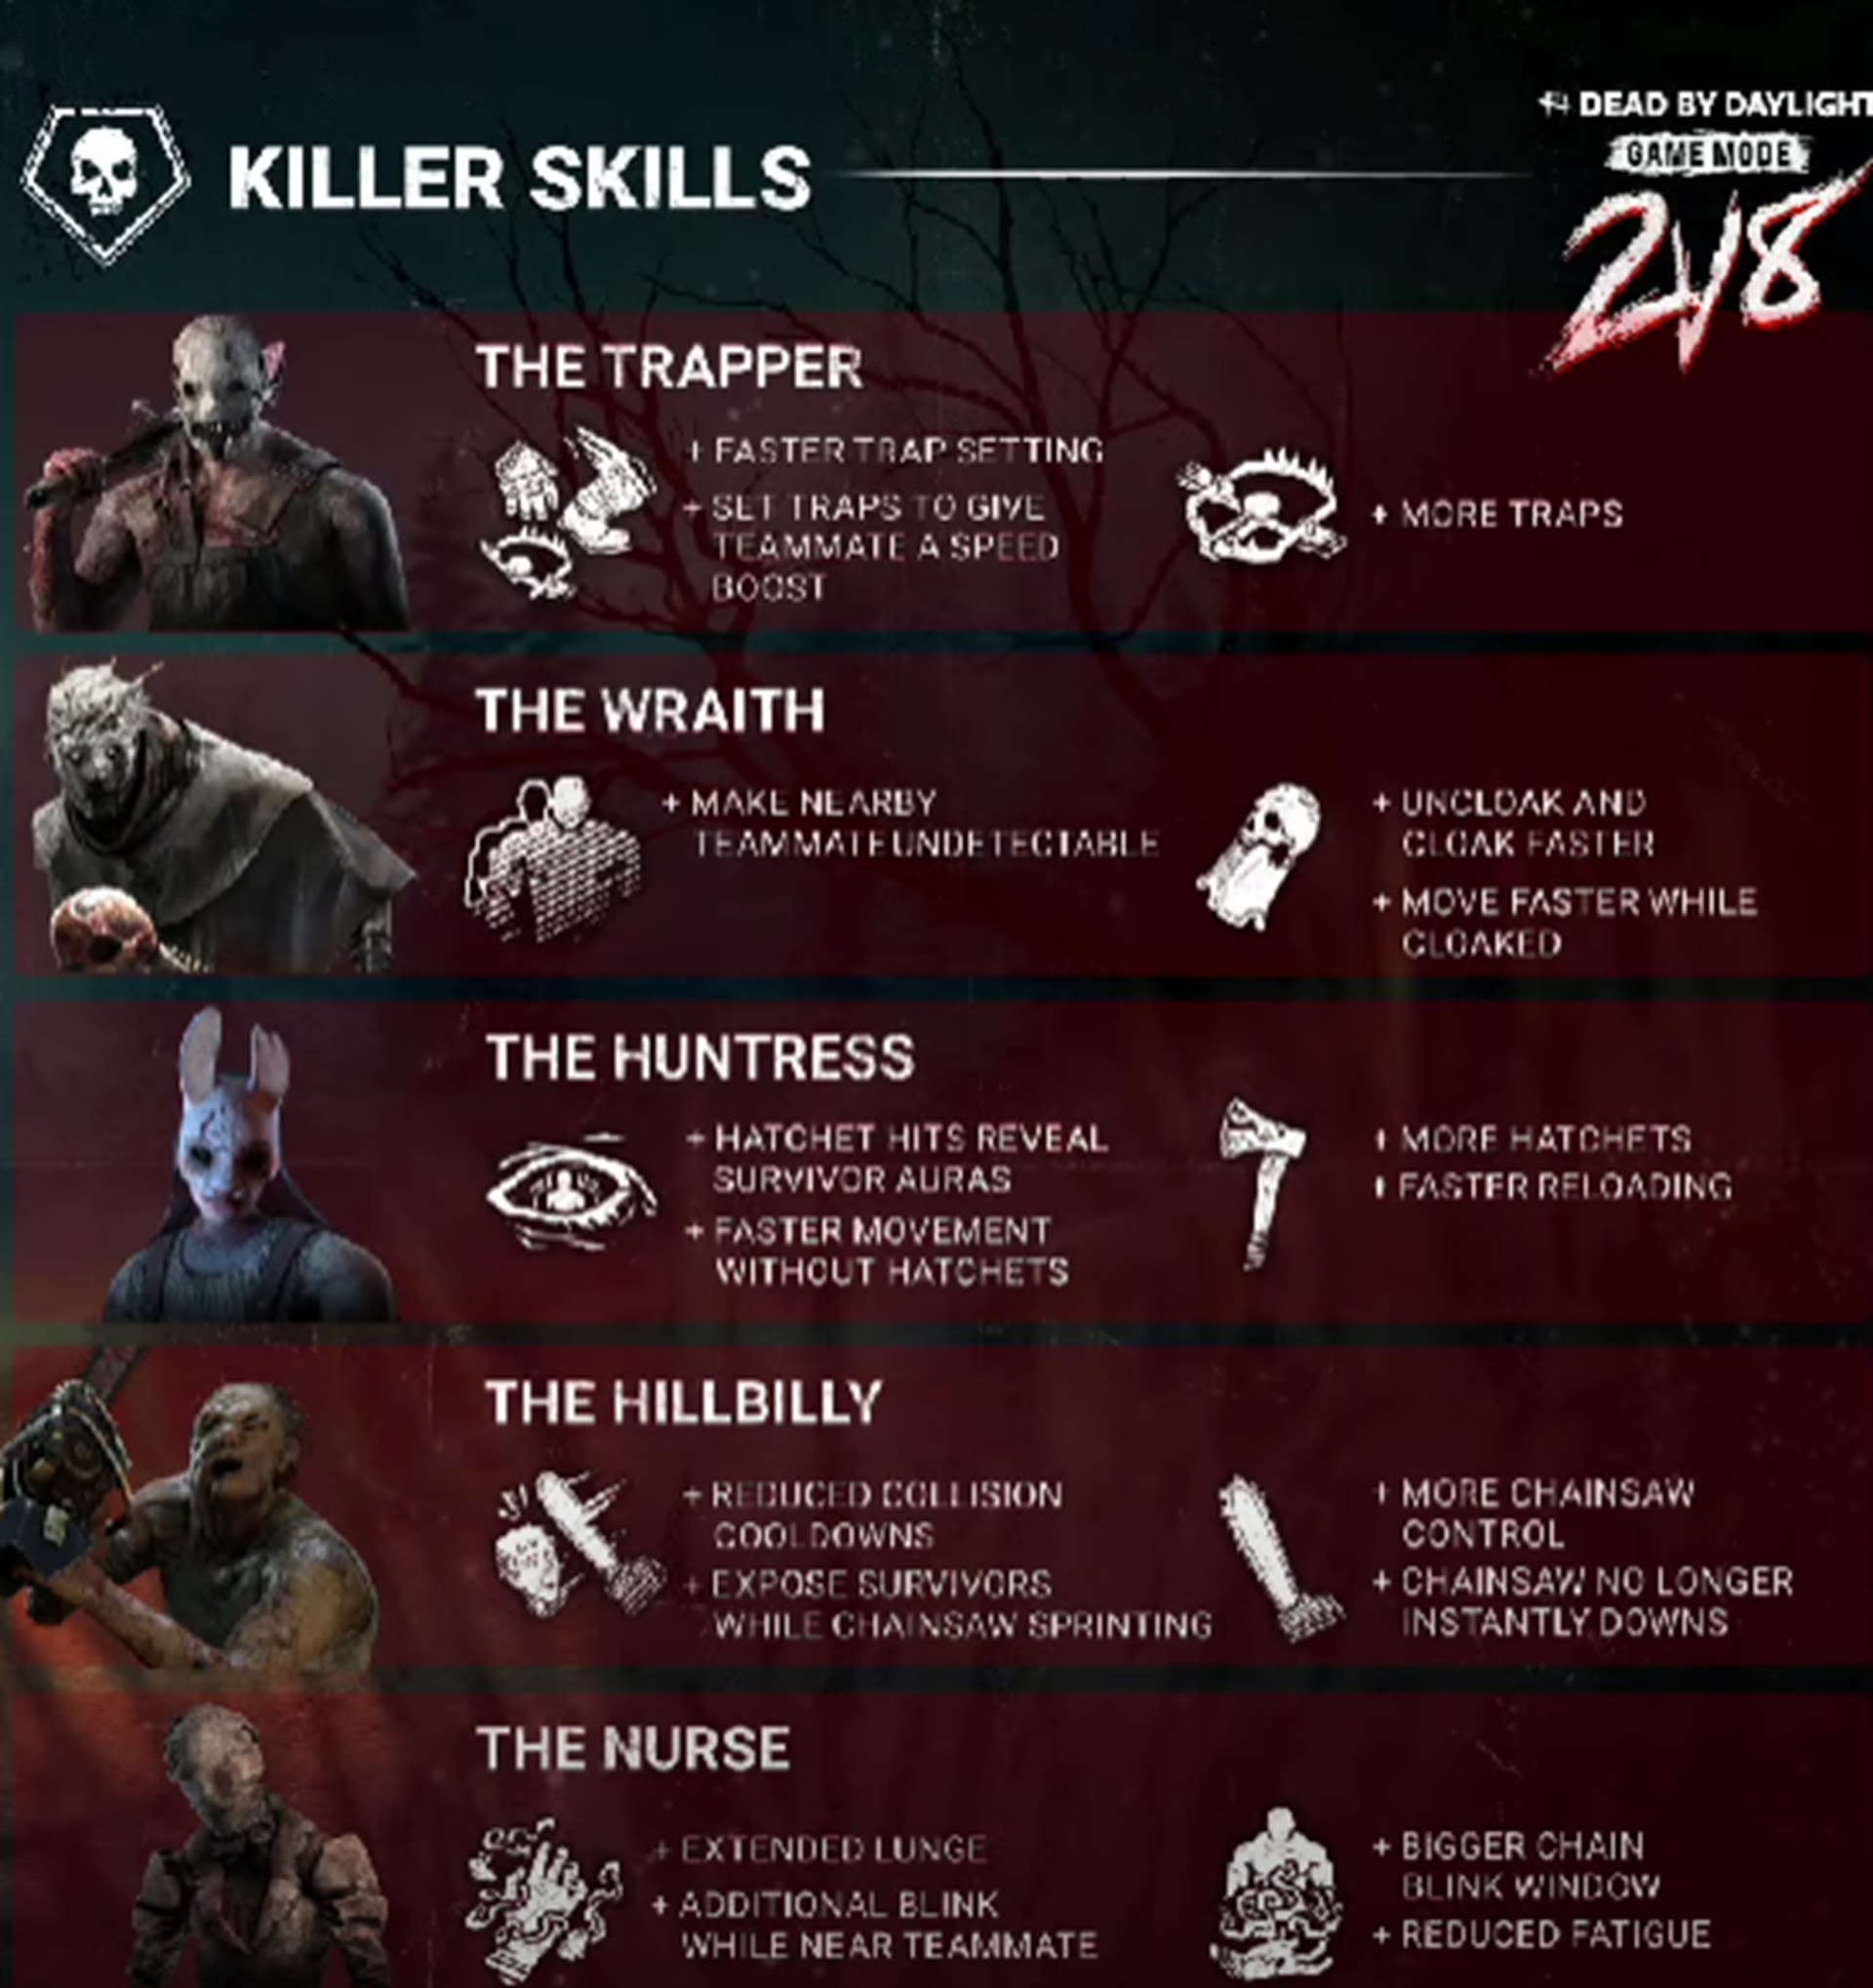 DBD 2v8 mode release date, killer skills, survivor classes and exciting details